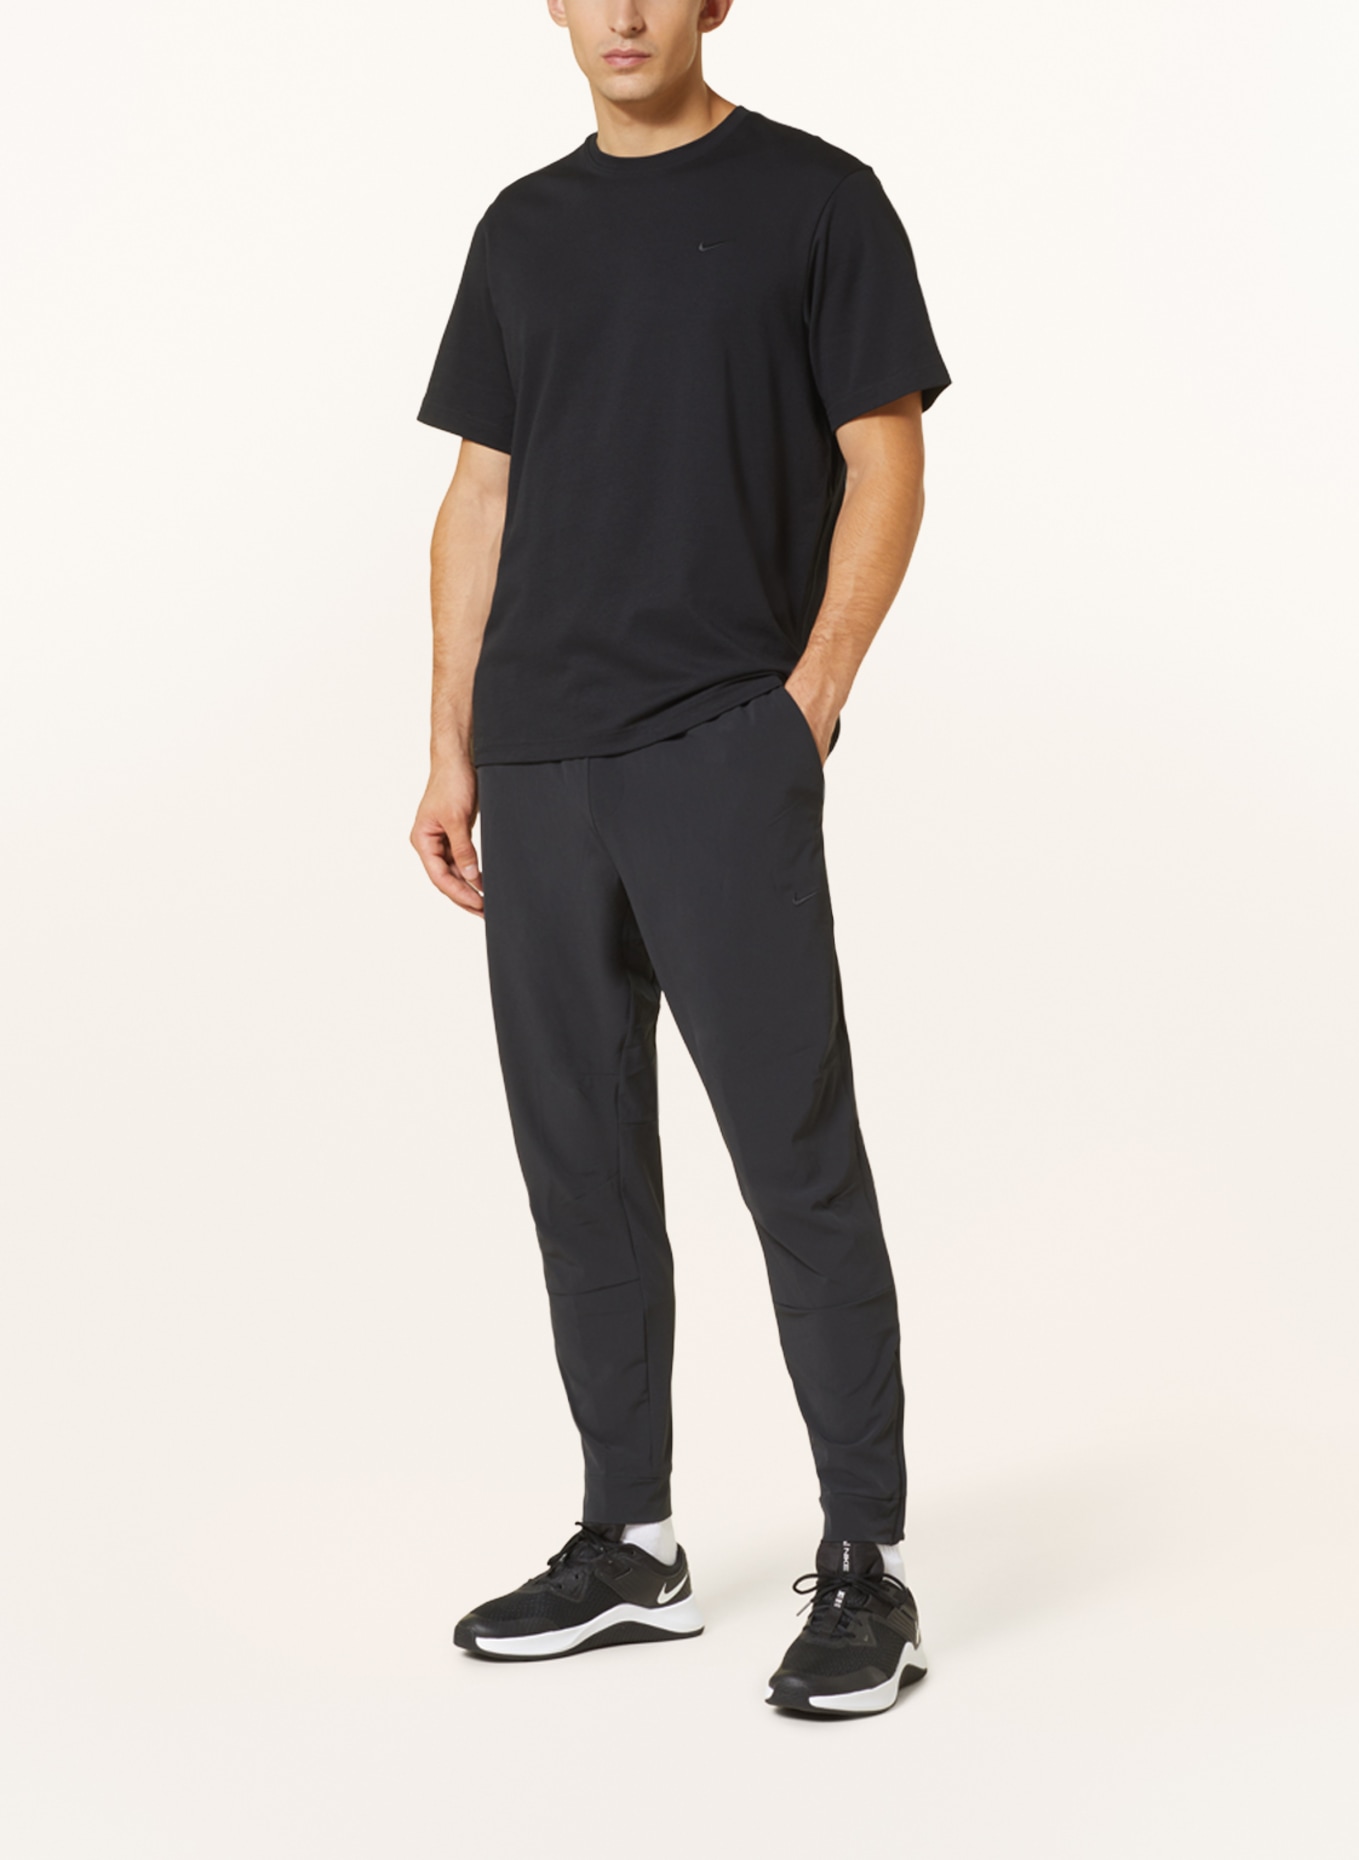 PANTS ACT Training trousers - Men - Diadora Online Store US